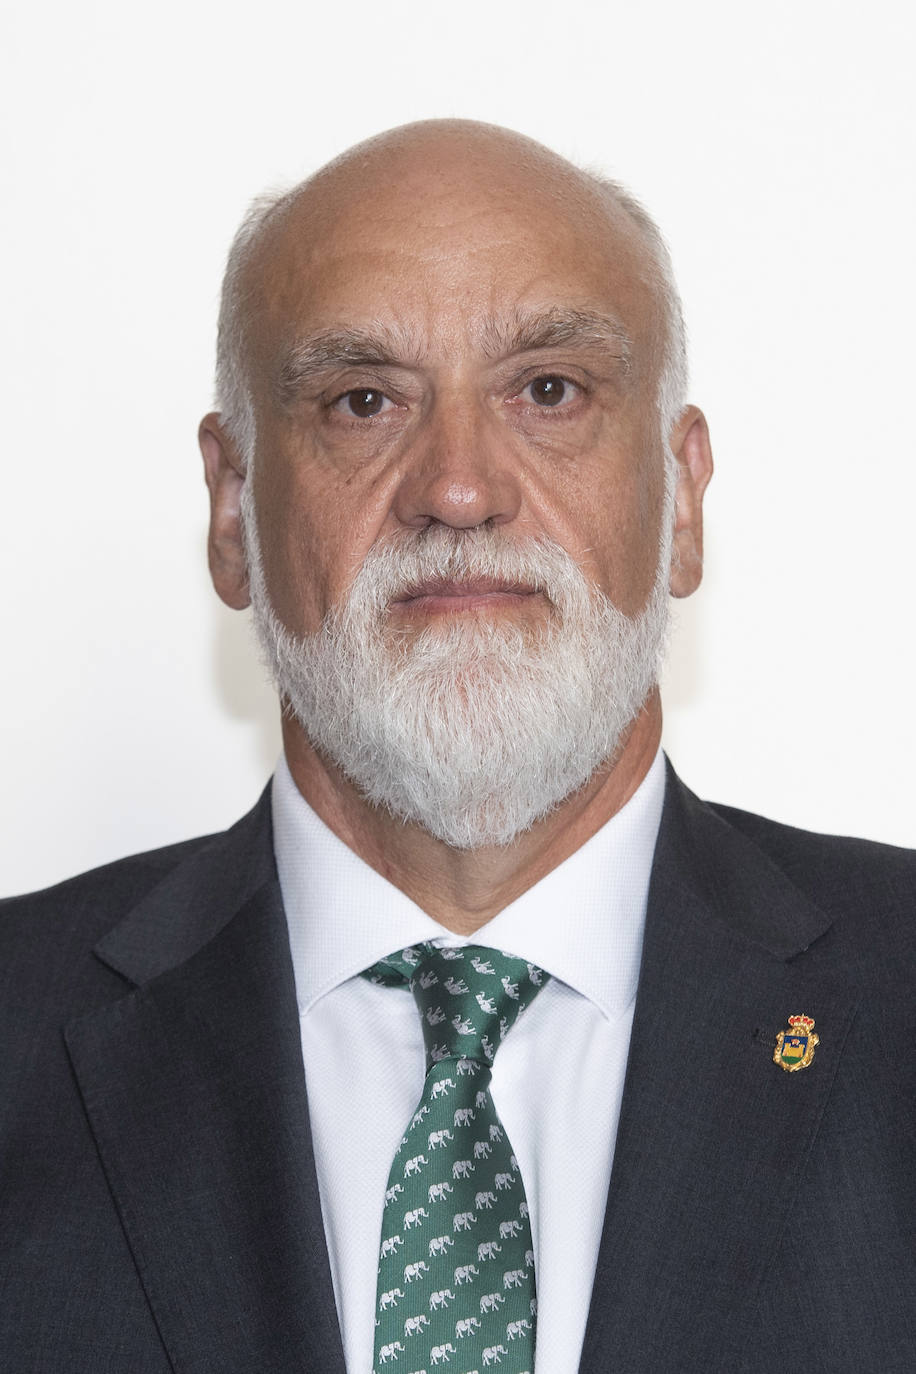 Javier Vidal (La Línea 100x100, concejal en La Línea)